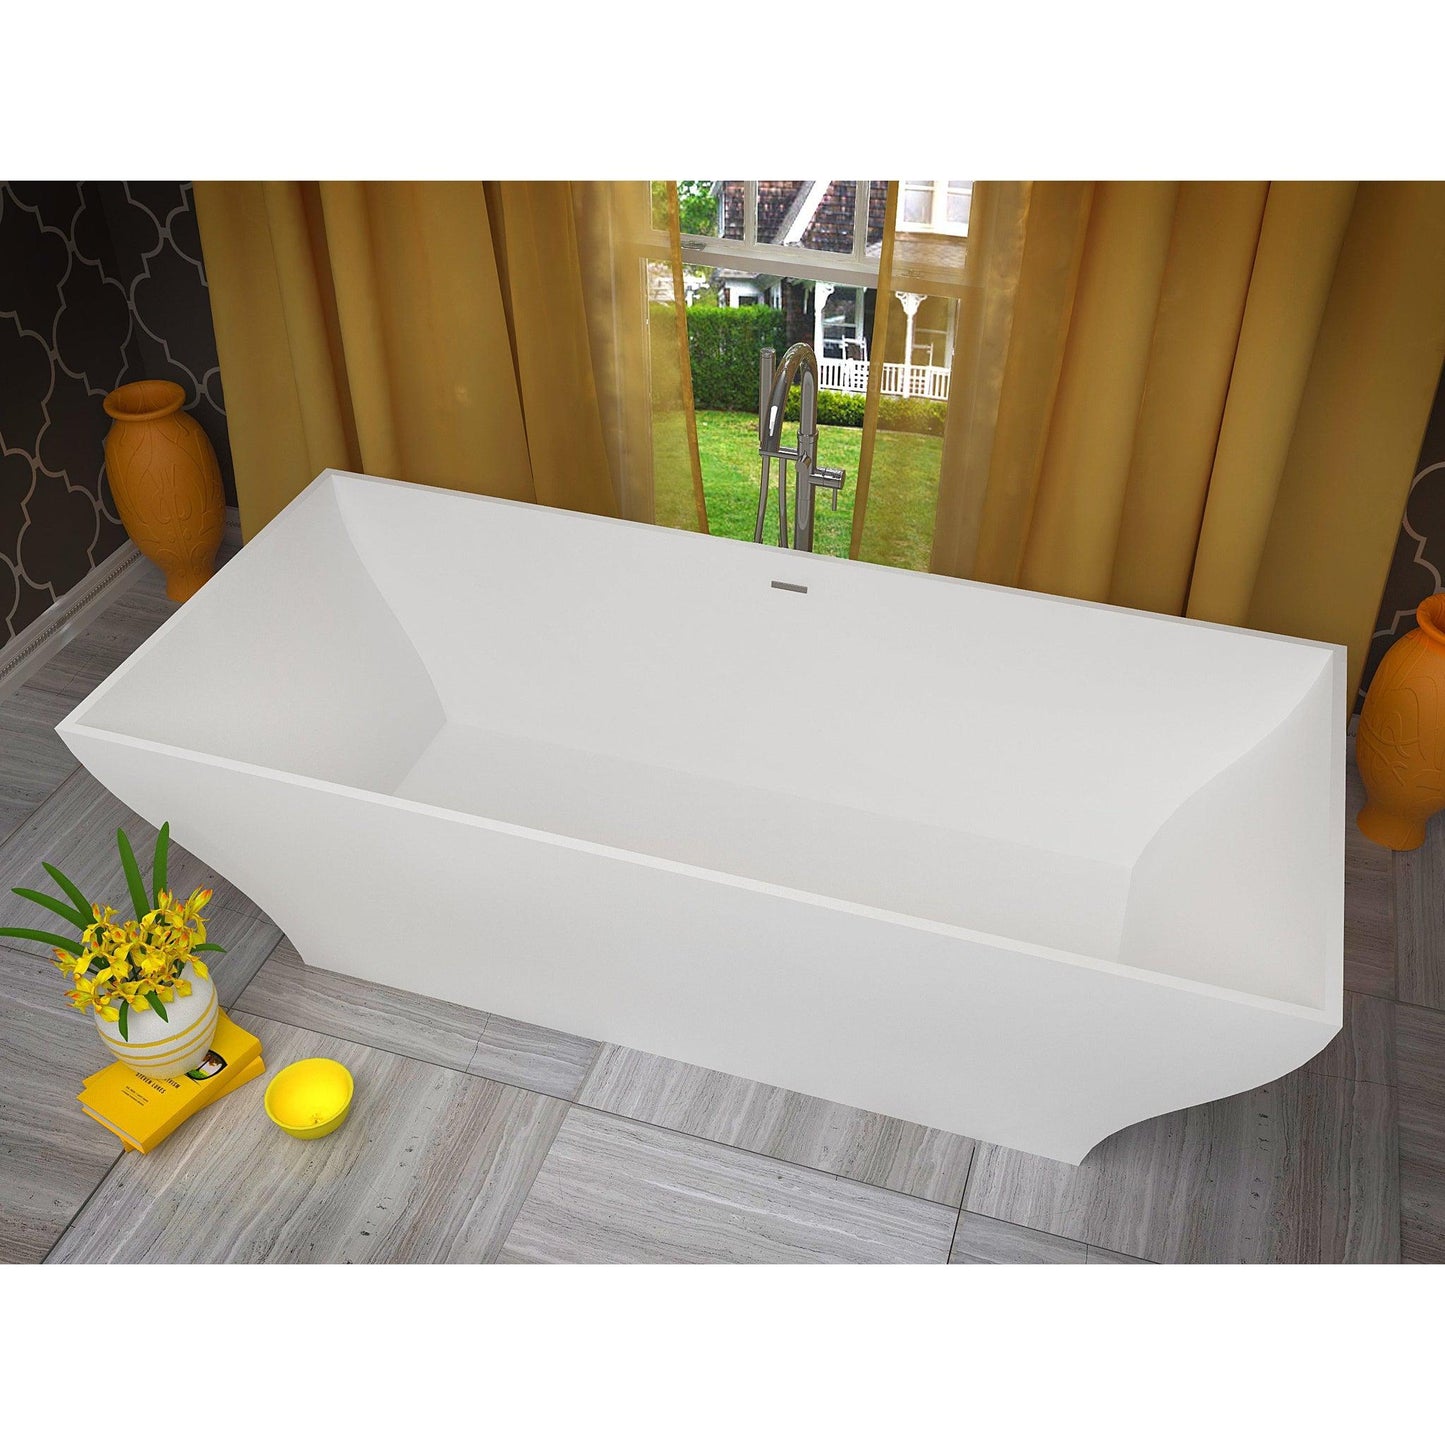 ANZZI Crema Series 71" x 32" Freestanding Matte White Bathtub With Built-In Overflow